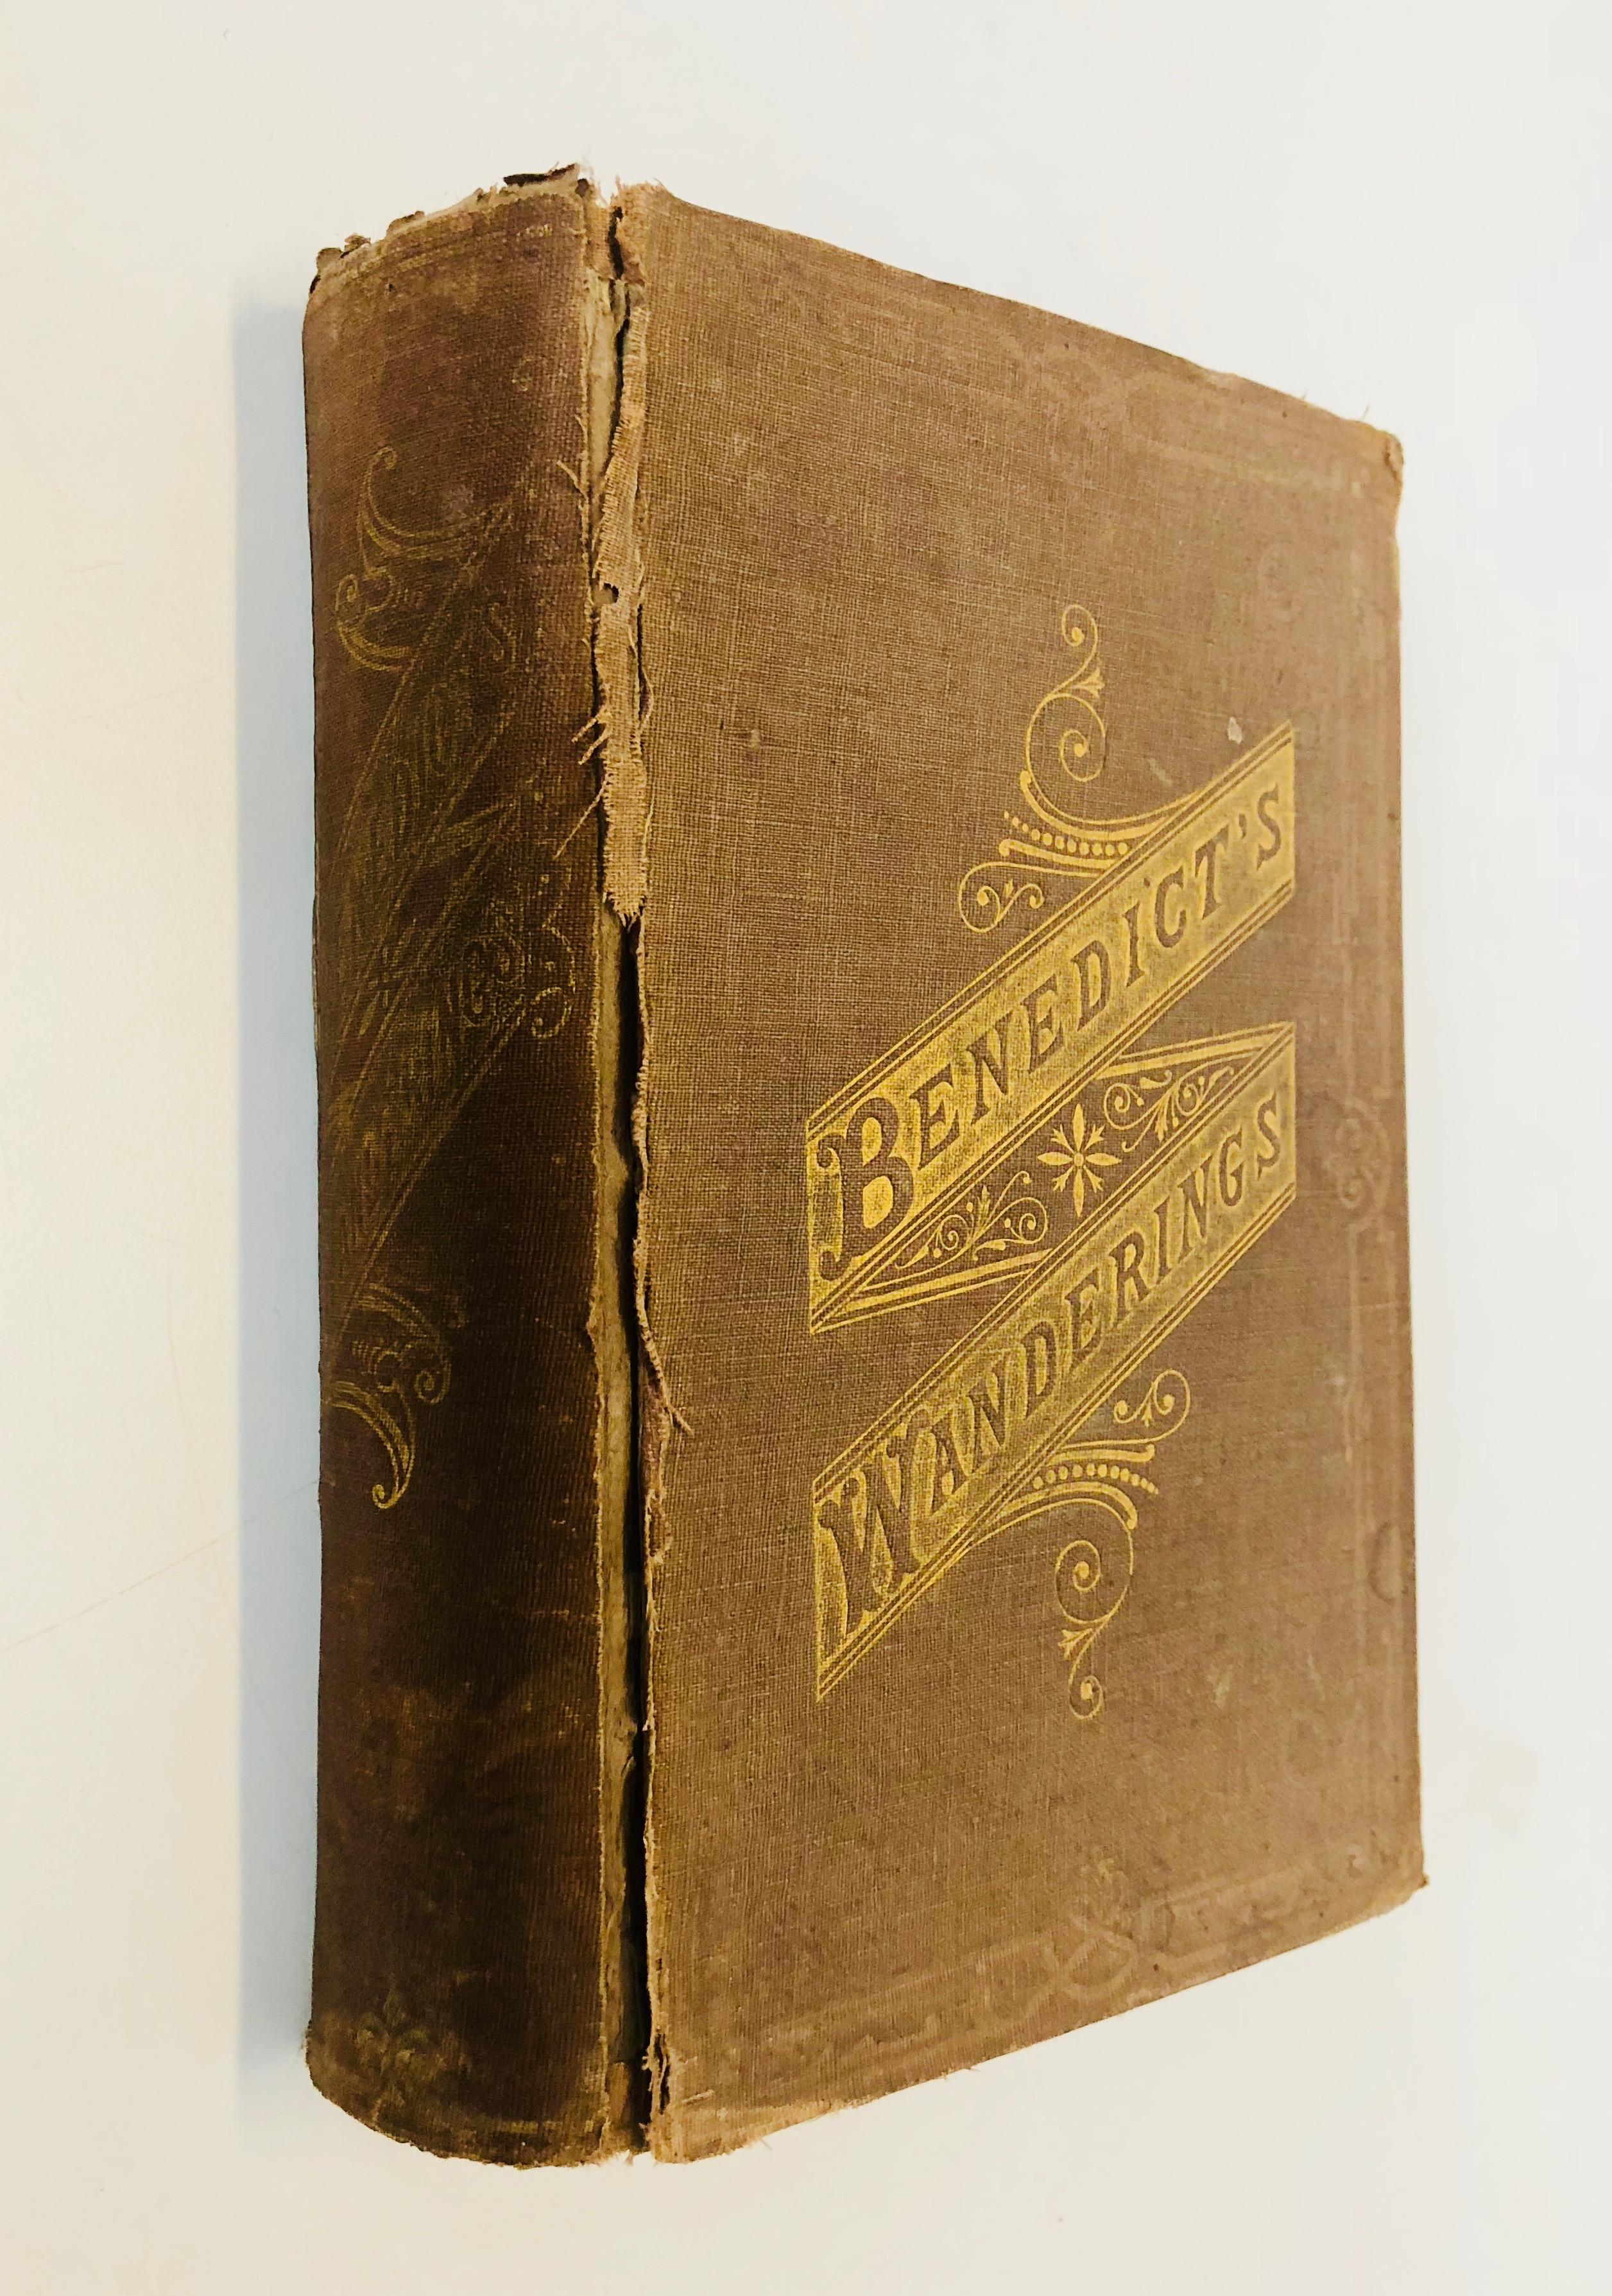 BENEDICT'S WANDERINGS in Ireland, Scotland, Italy & Sicily (1873) TRAVEL